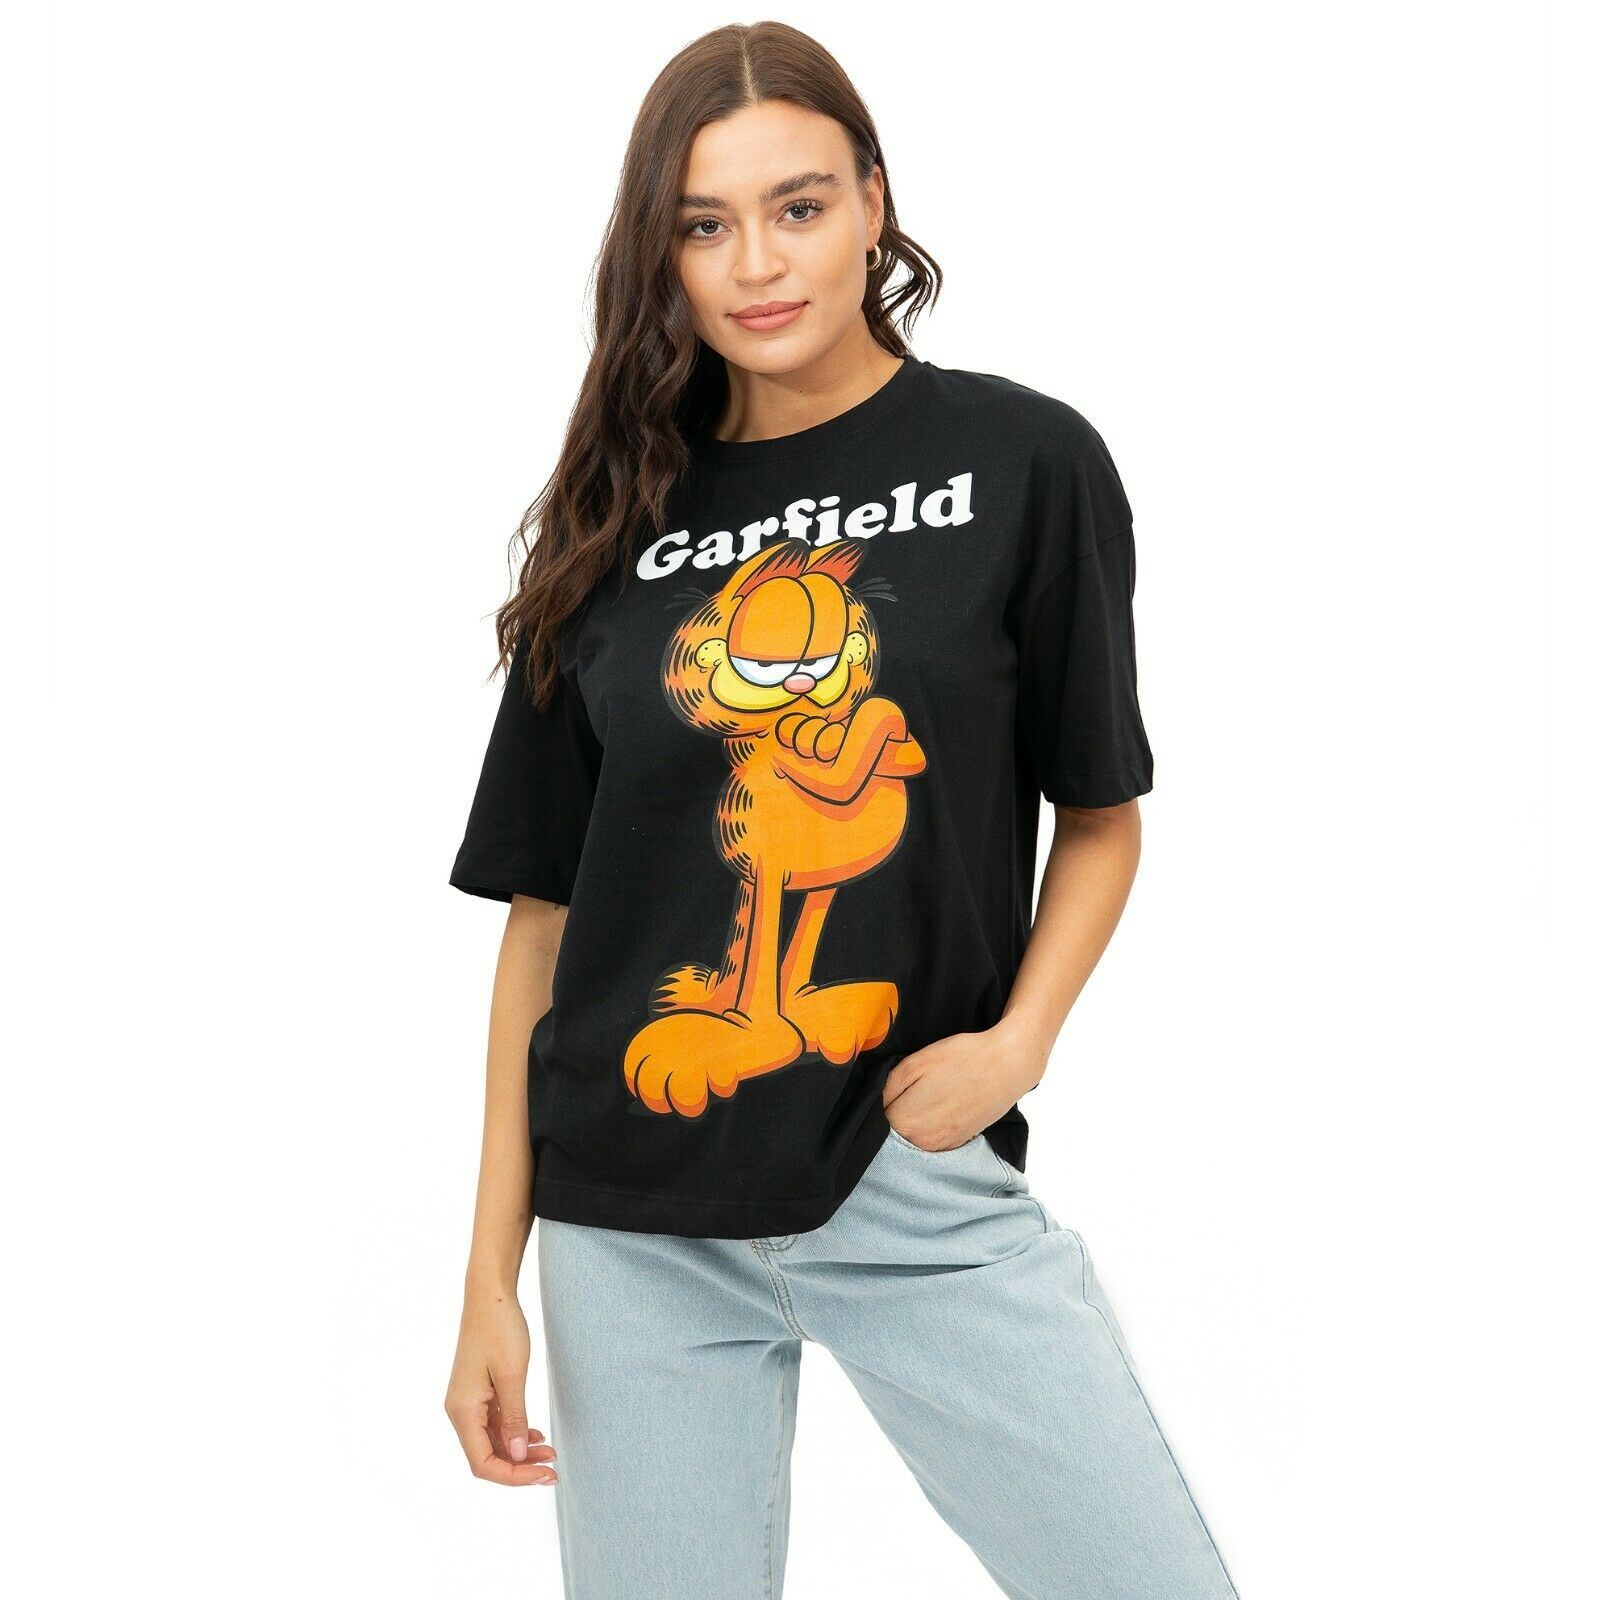 Official Garfield Ladies Garfield Smug Oversized T-Shirt Black S - XL | eBay